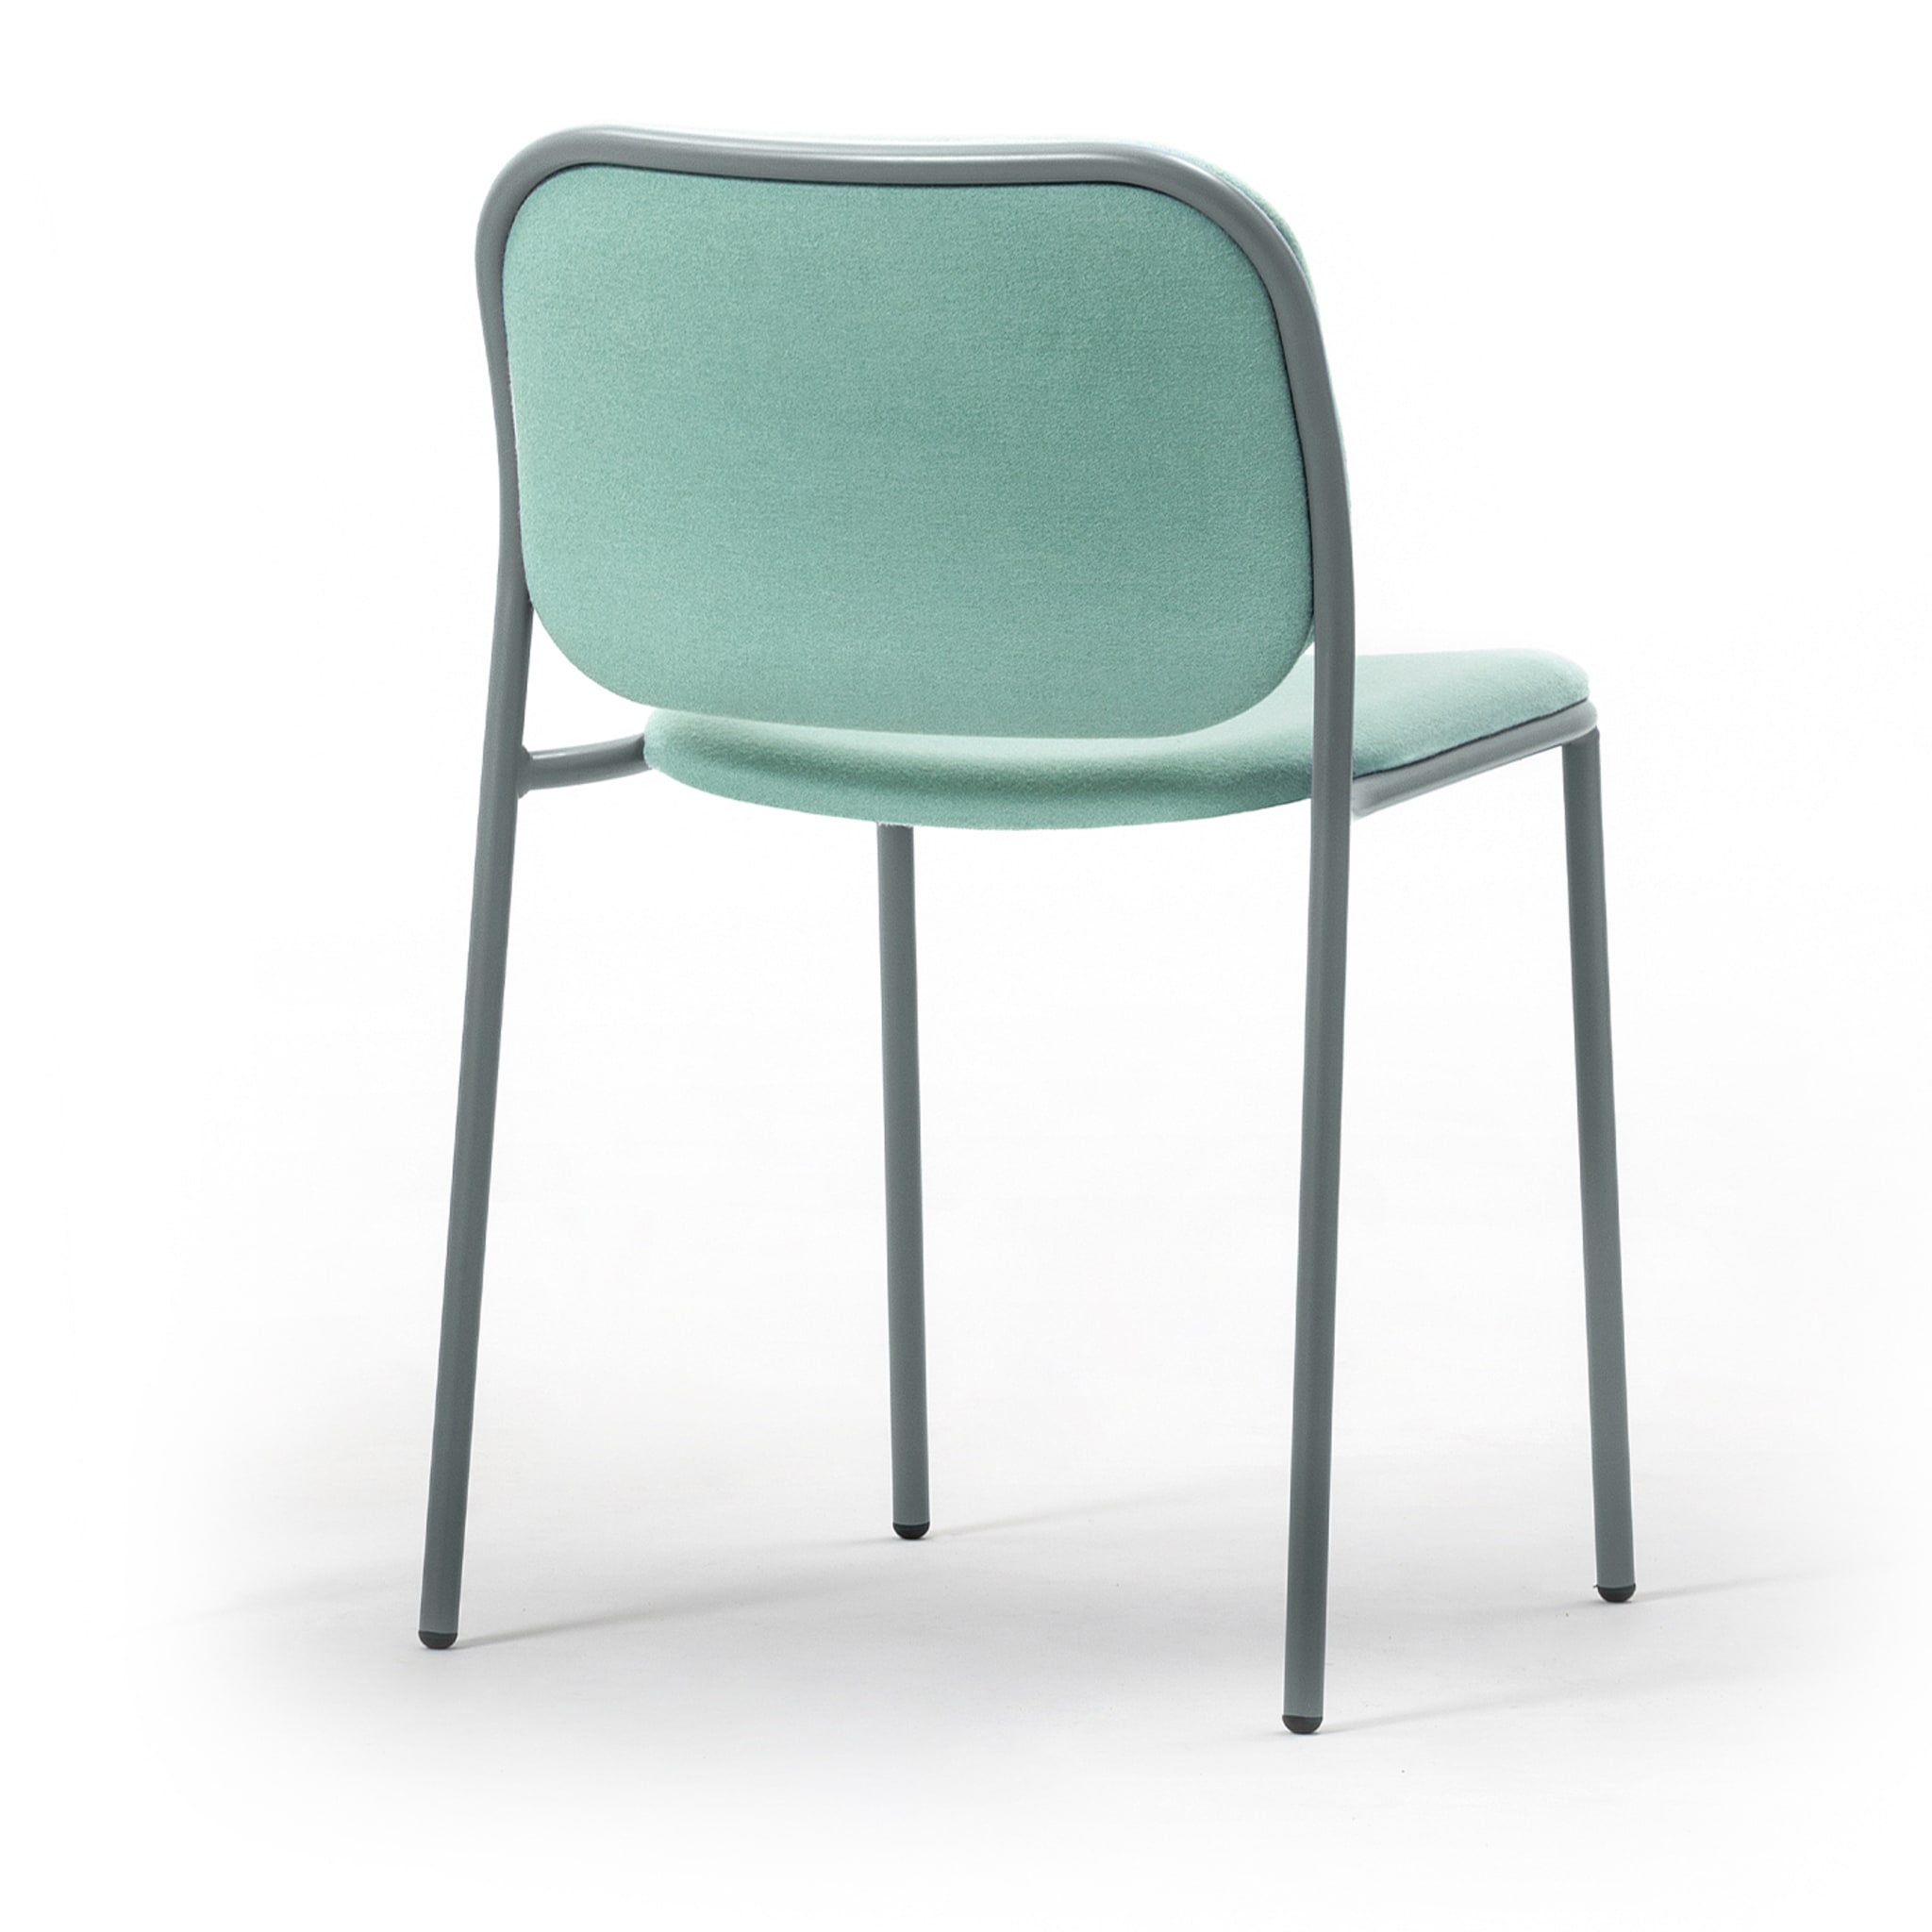 0180-IM-CB Metis Gray Chair by Studio Gabbertas - Alternative view 1